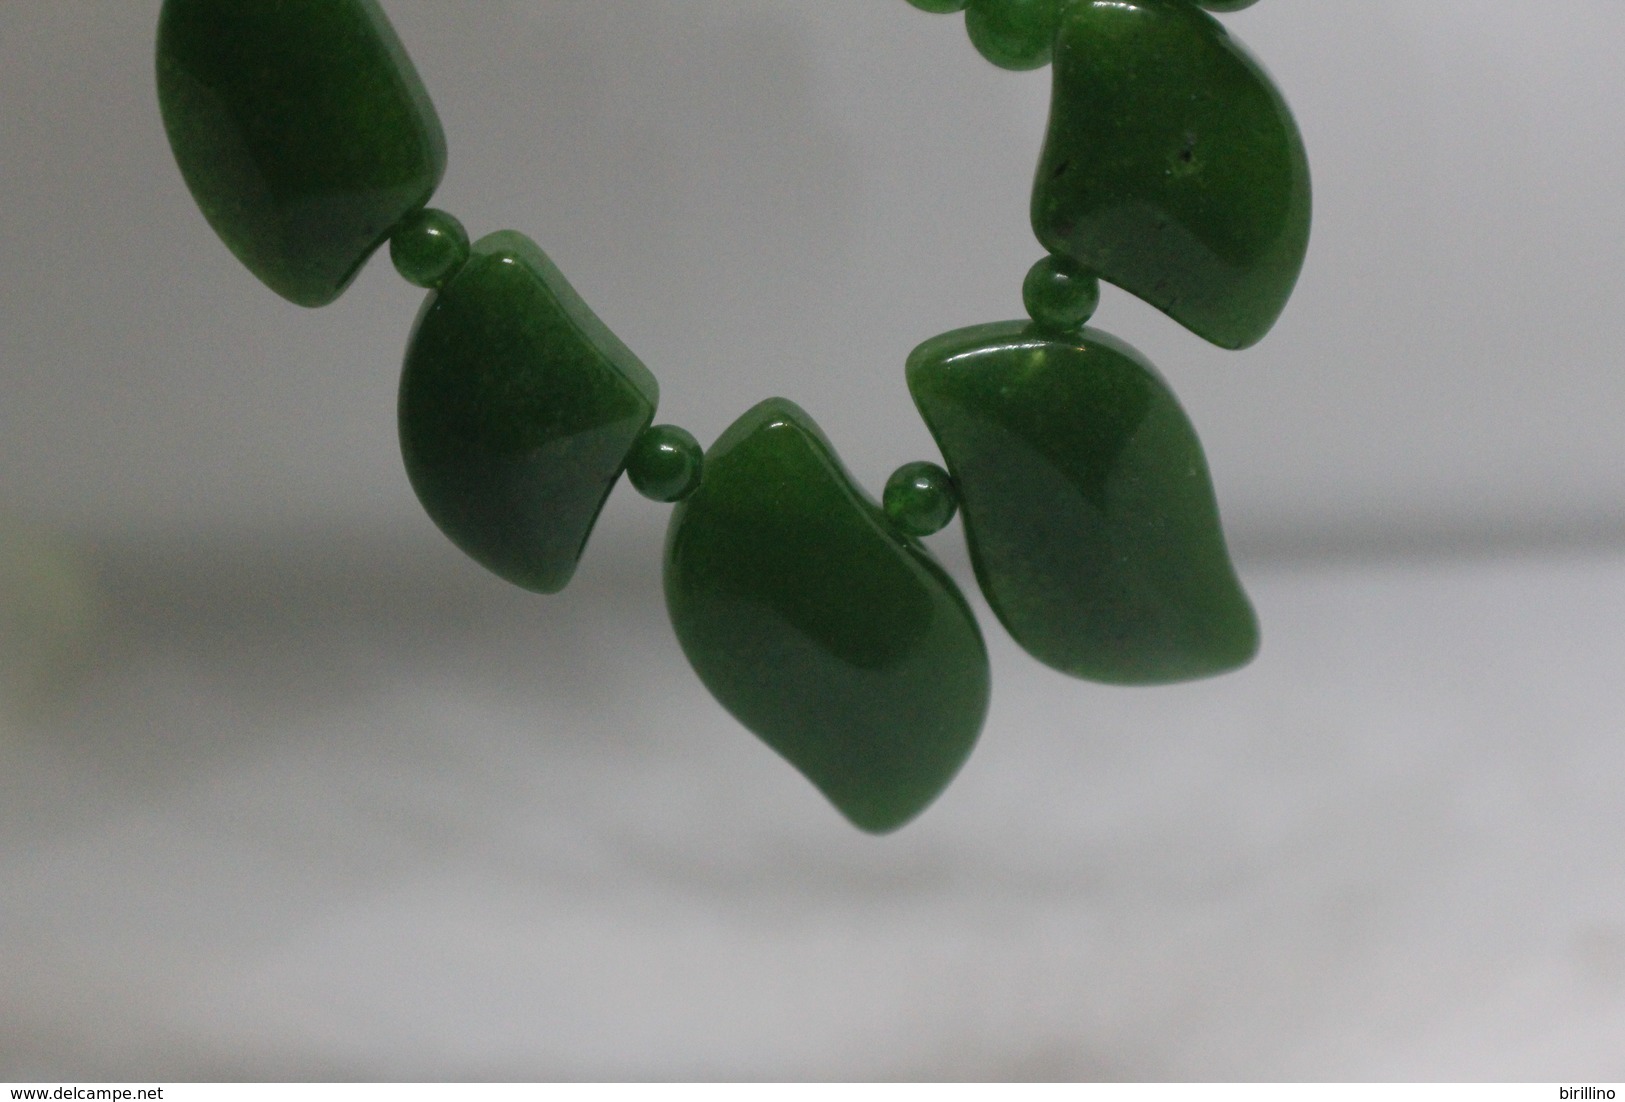 3856 - Collana di giada naturale (serpentino New Jade) lucidata a mano. Peso totale 44 gr.